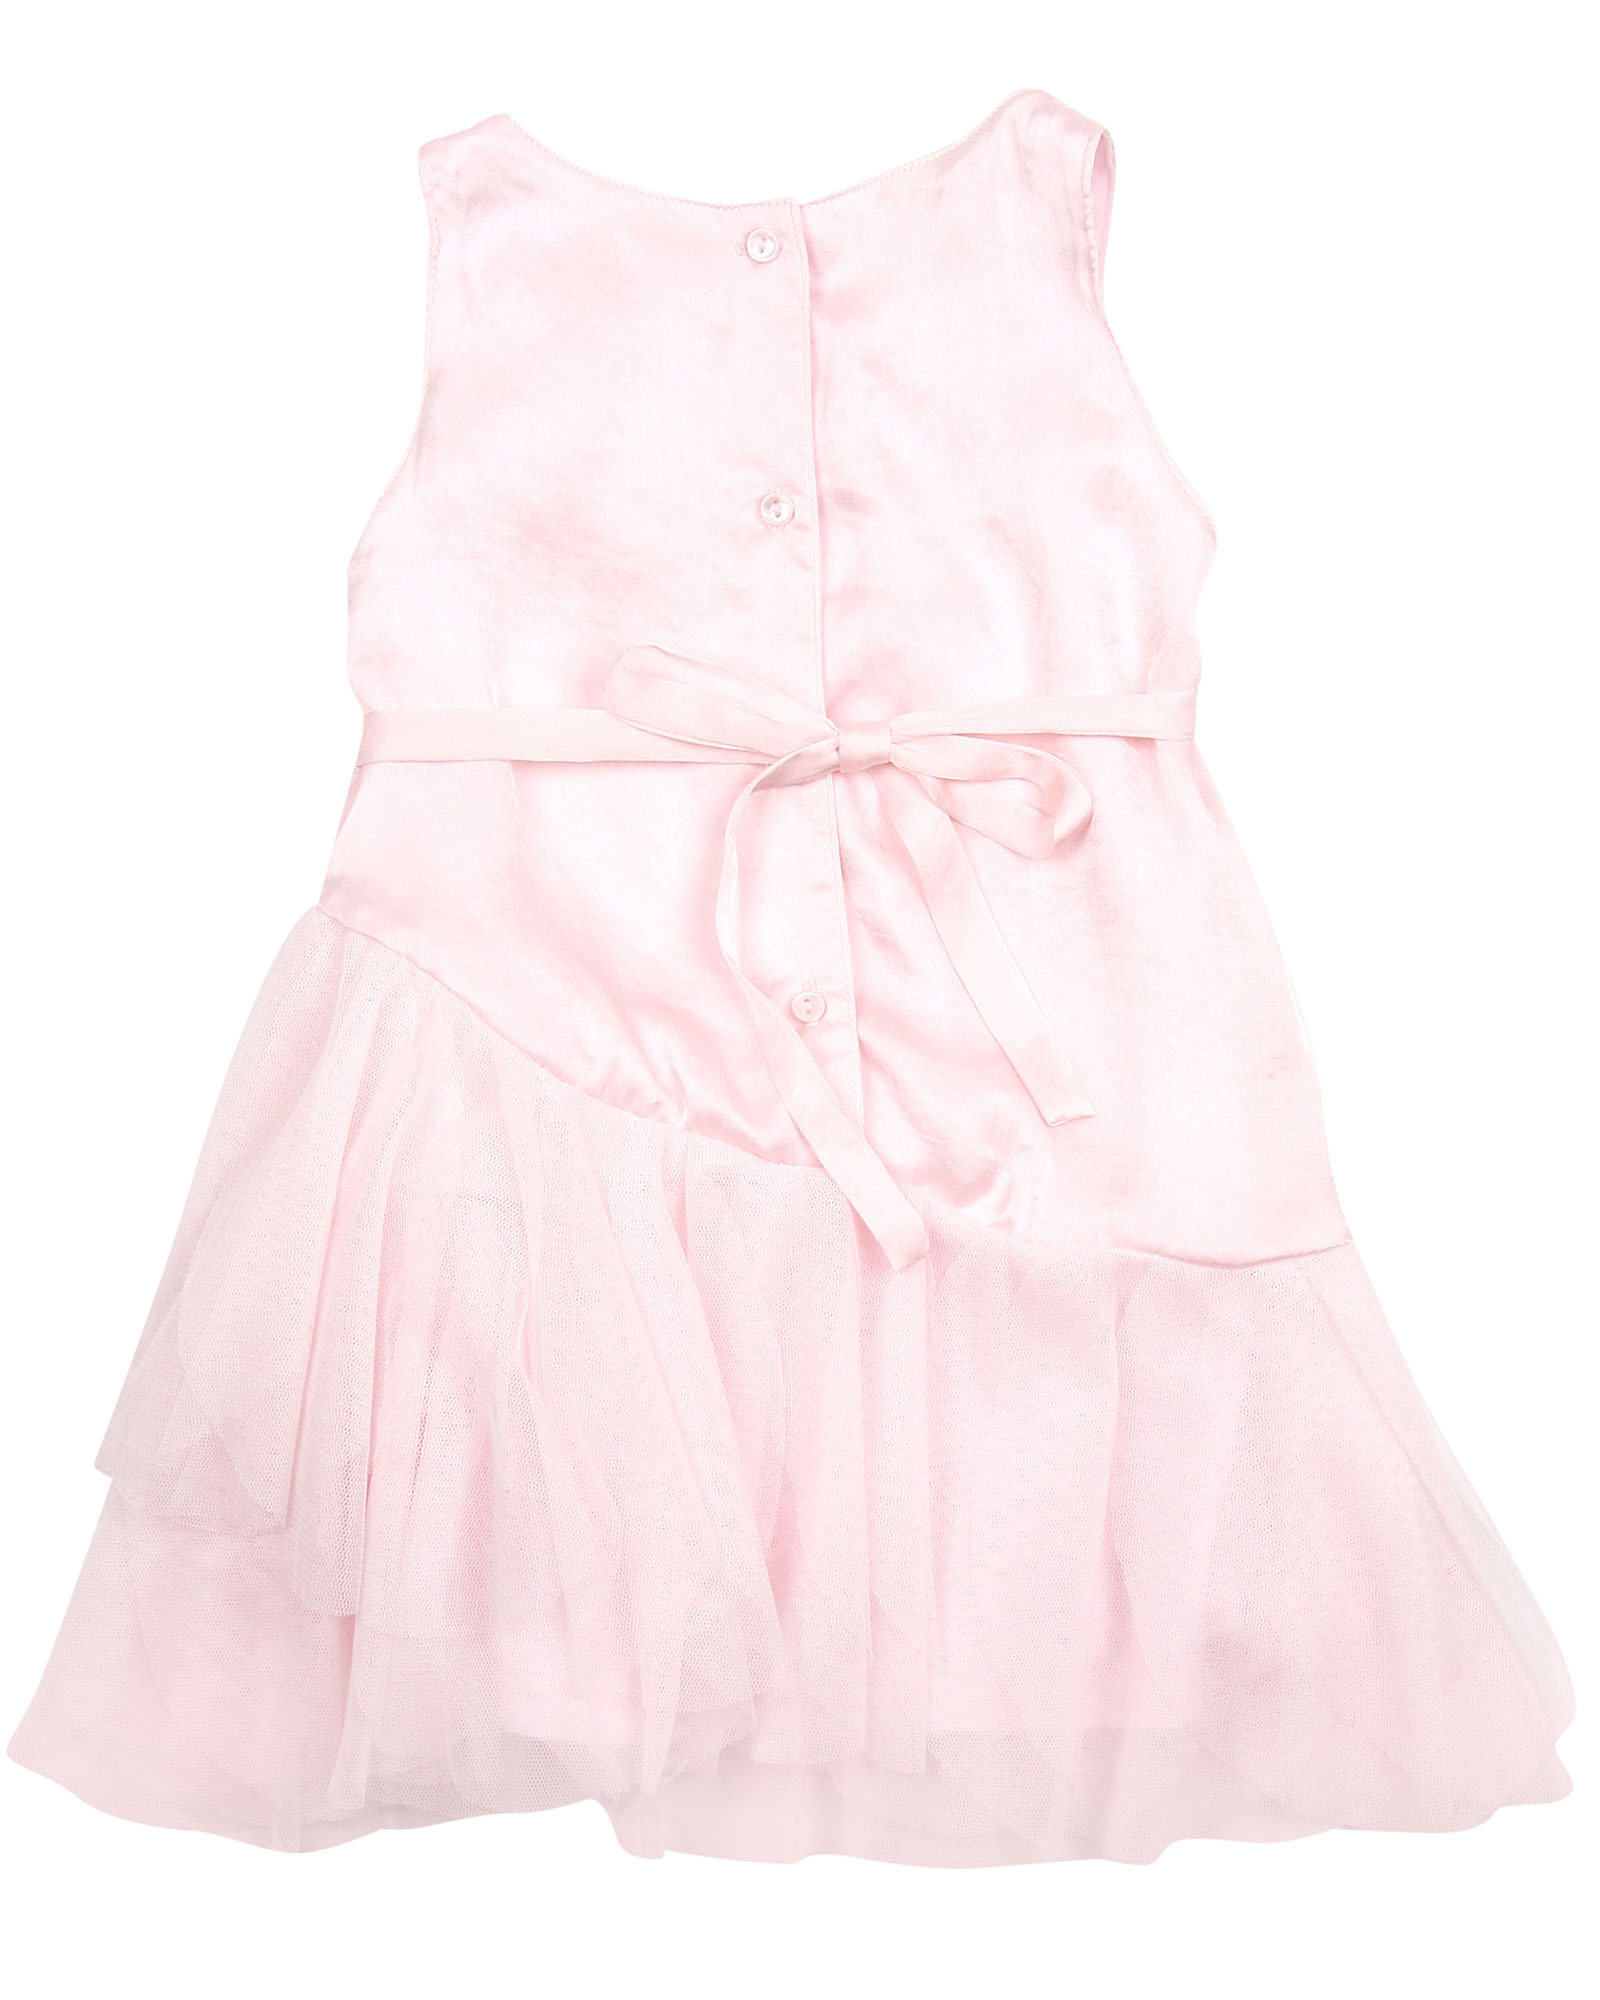 Biscotti Baby Dress
 Biscotti Baby Girls Dress Silky Satin Sizes 12M 24M 18M